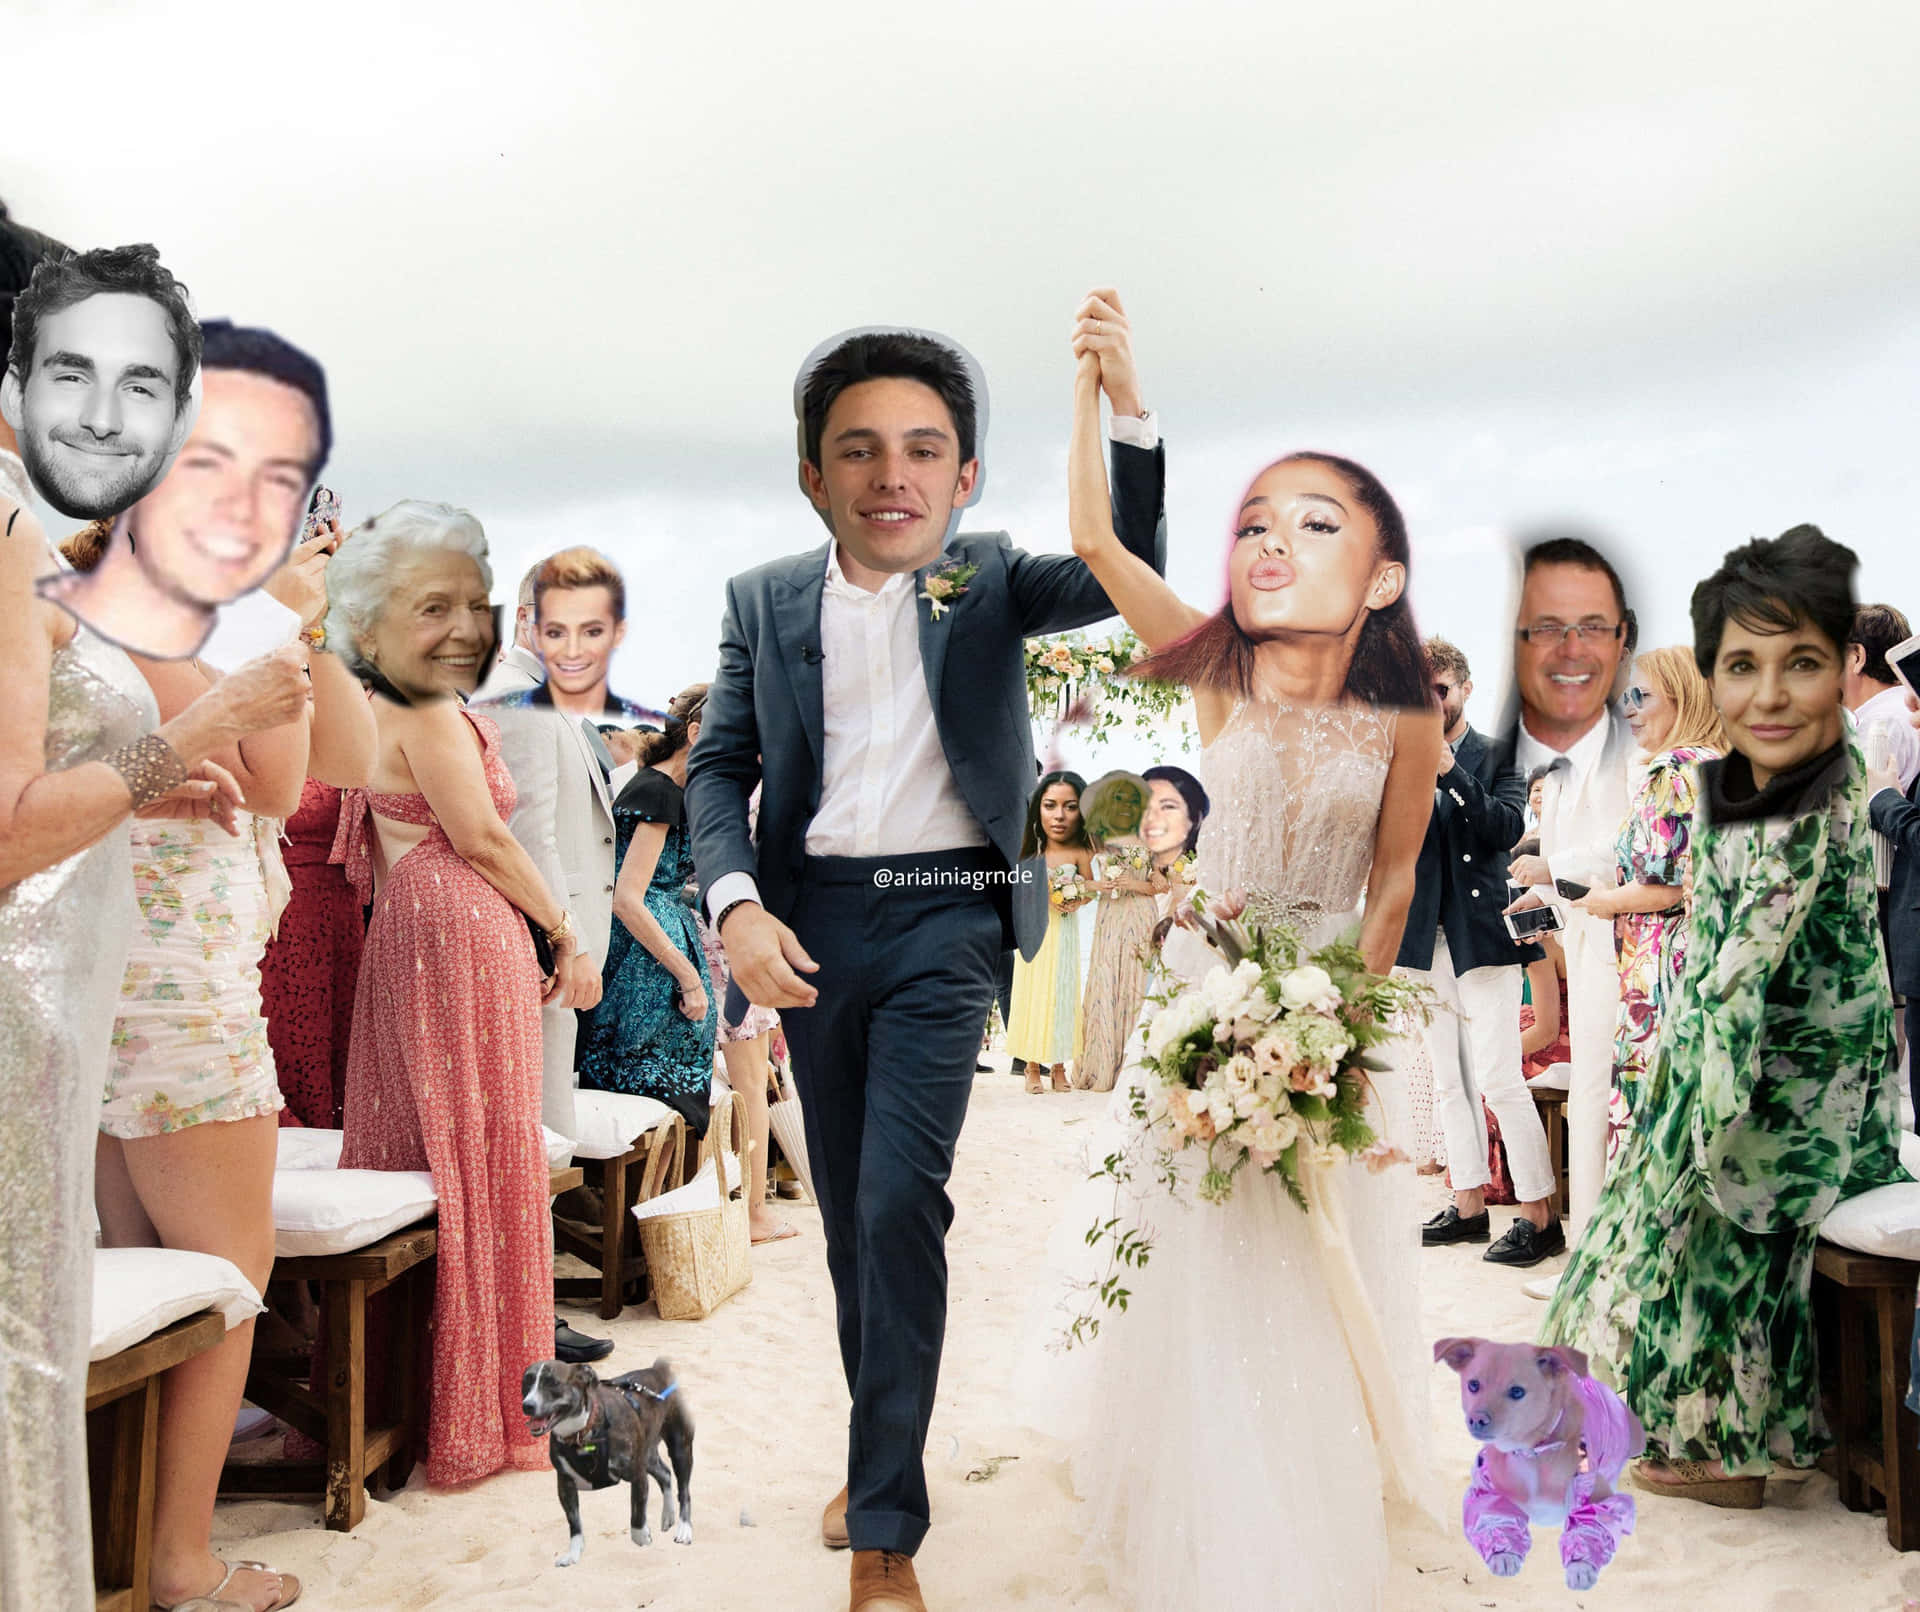 Ariana Grande in her stunning wedding dress